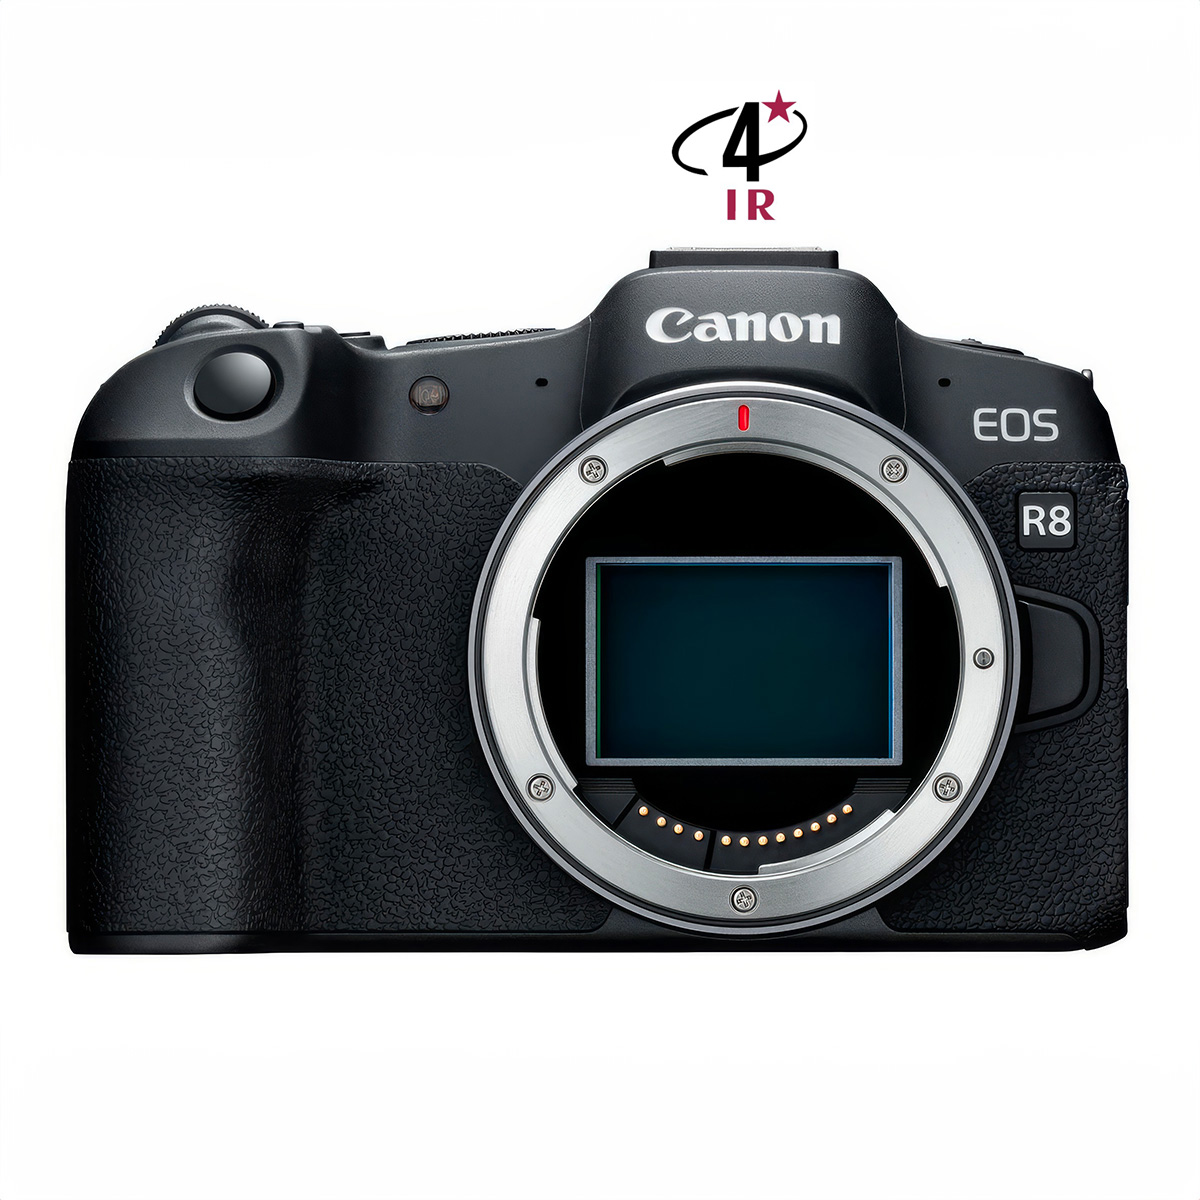 Hybride Canon EOS R8 neuf défiltré + refiltré 4'IR New 4'IR Cameras